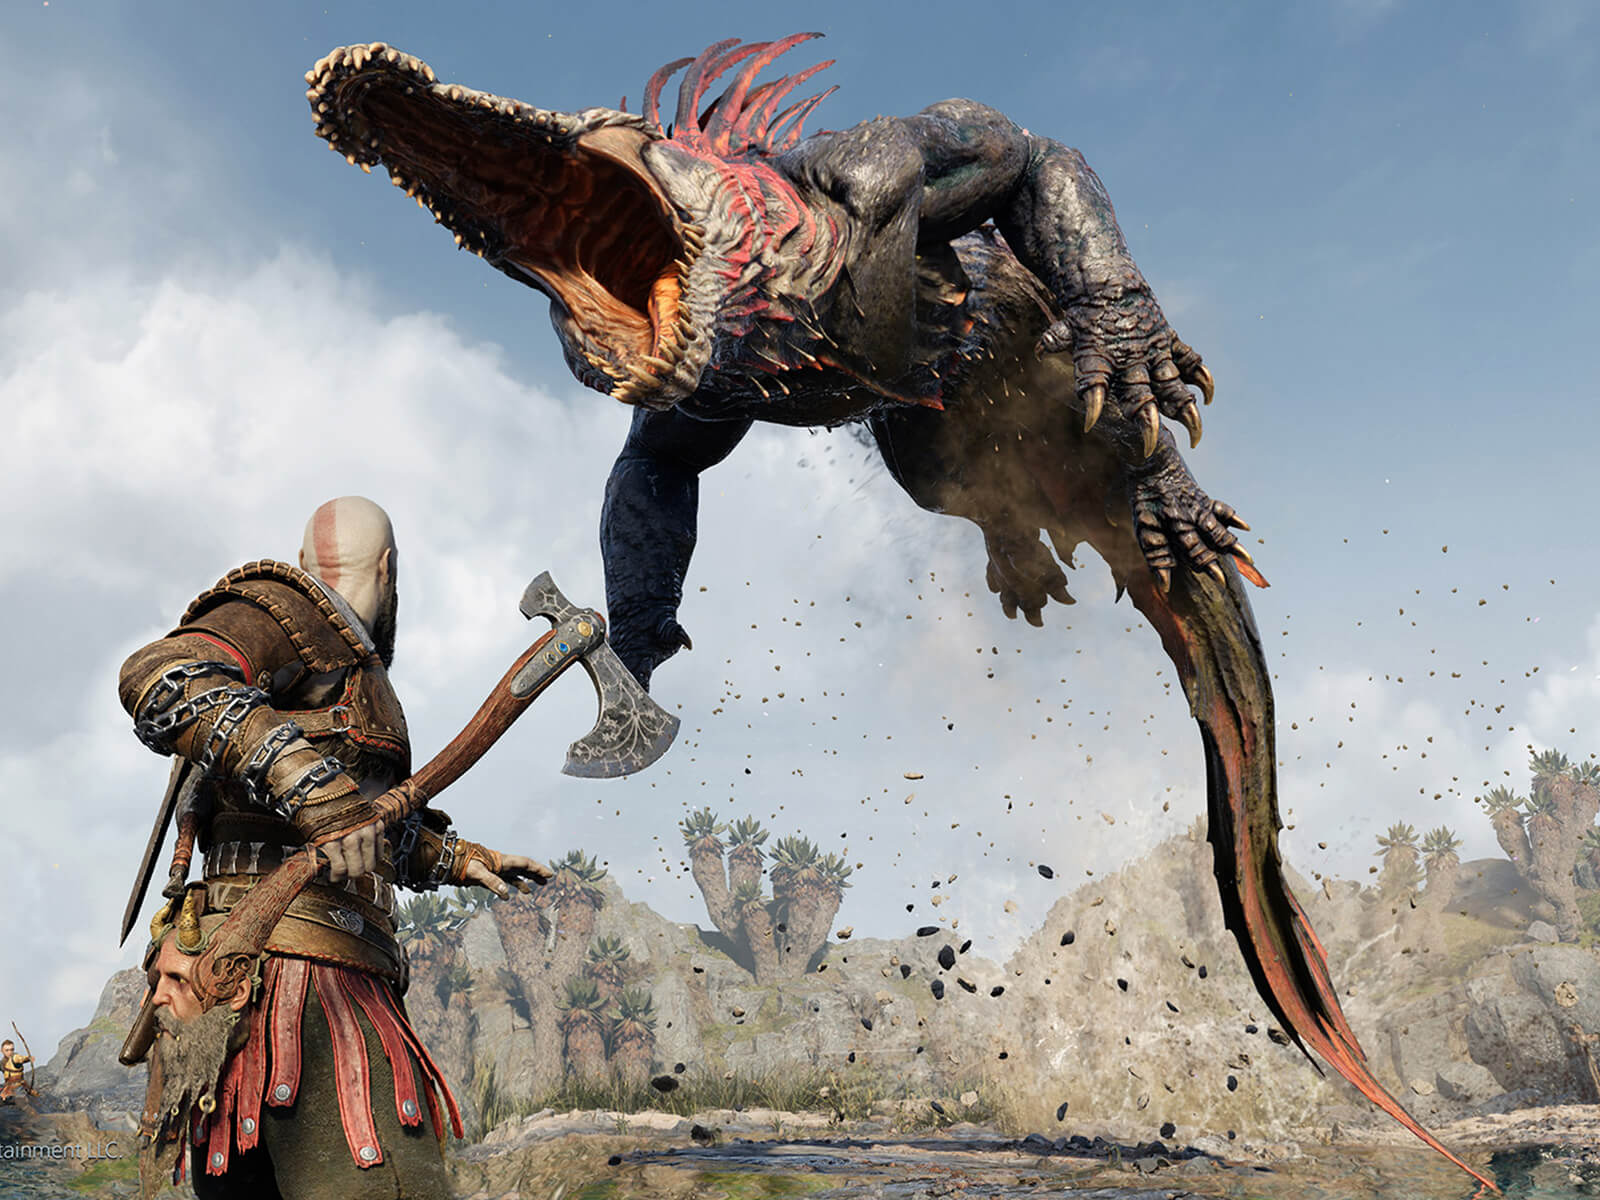 Kratos readies his axe as an enemy beast attacks him